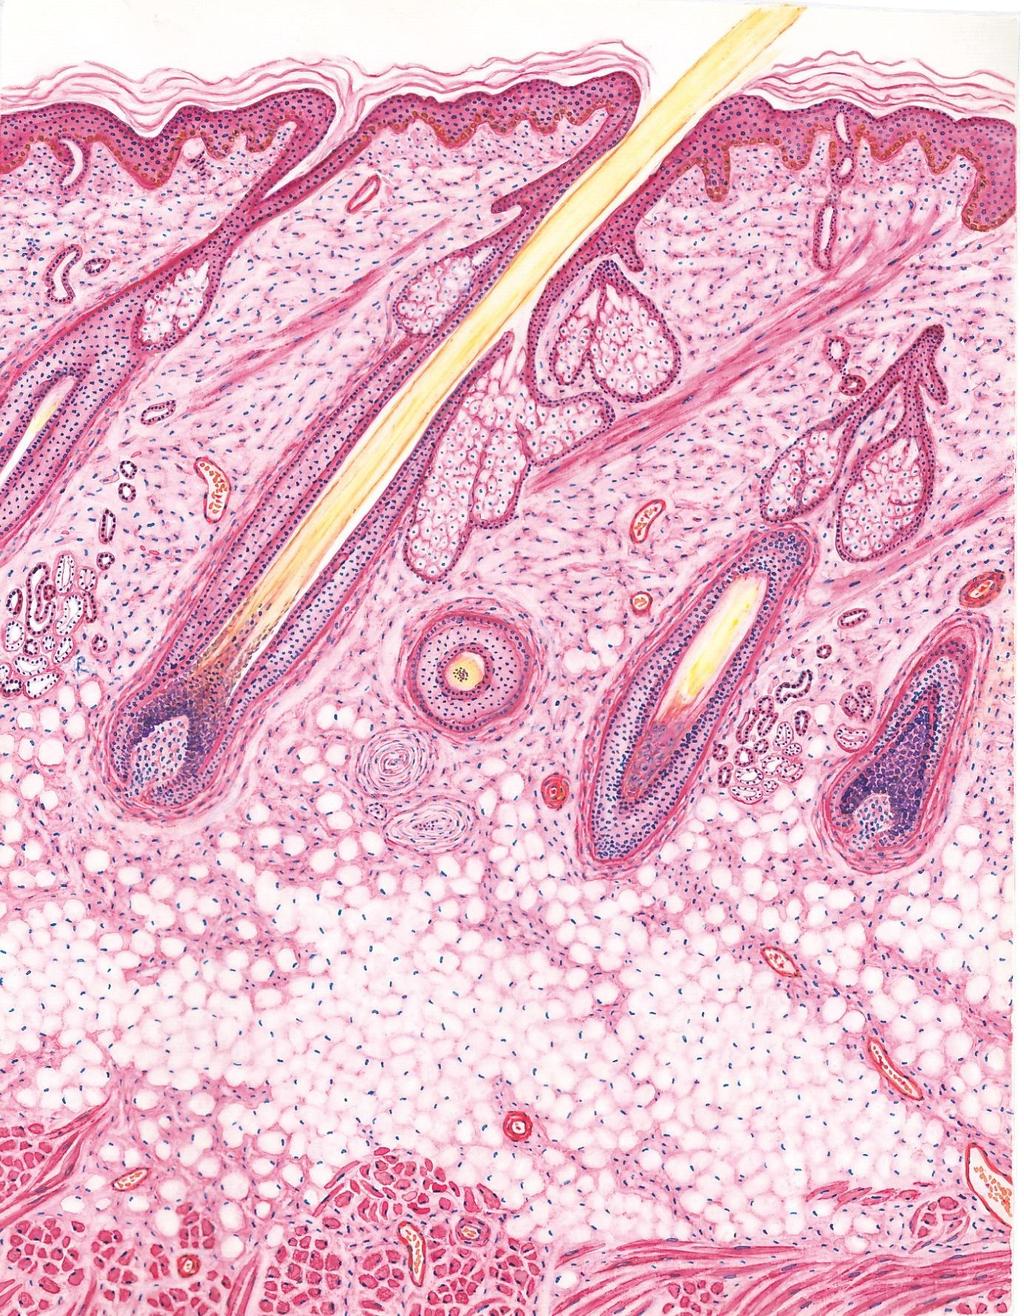 Sebaceous gland Hair follicle Arrector pili Pacinian